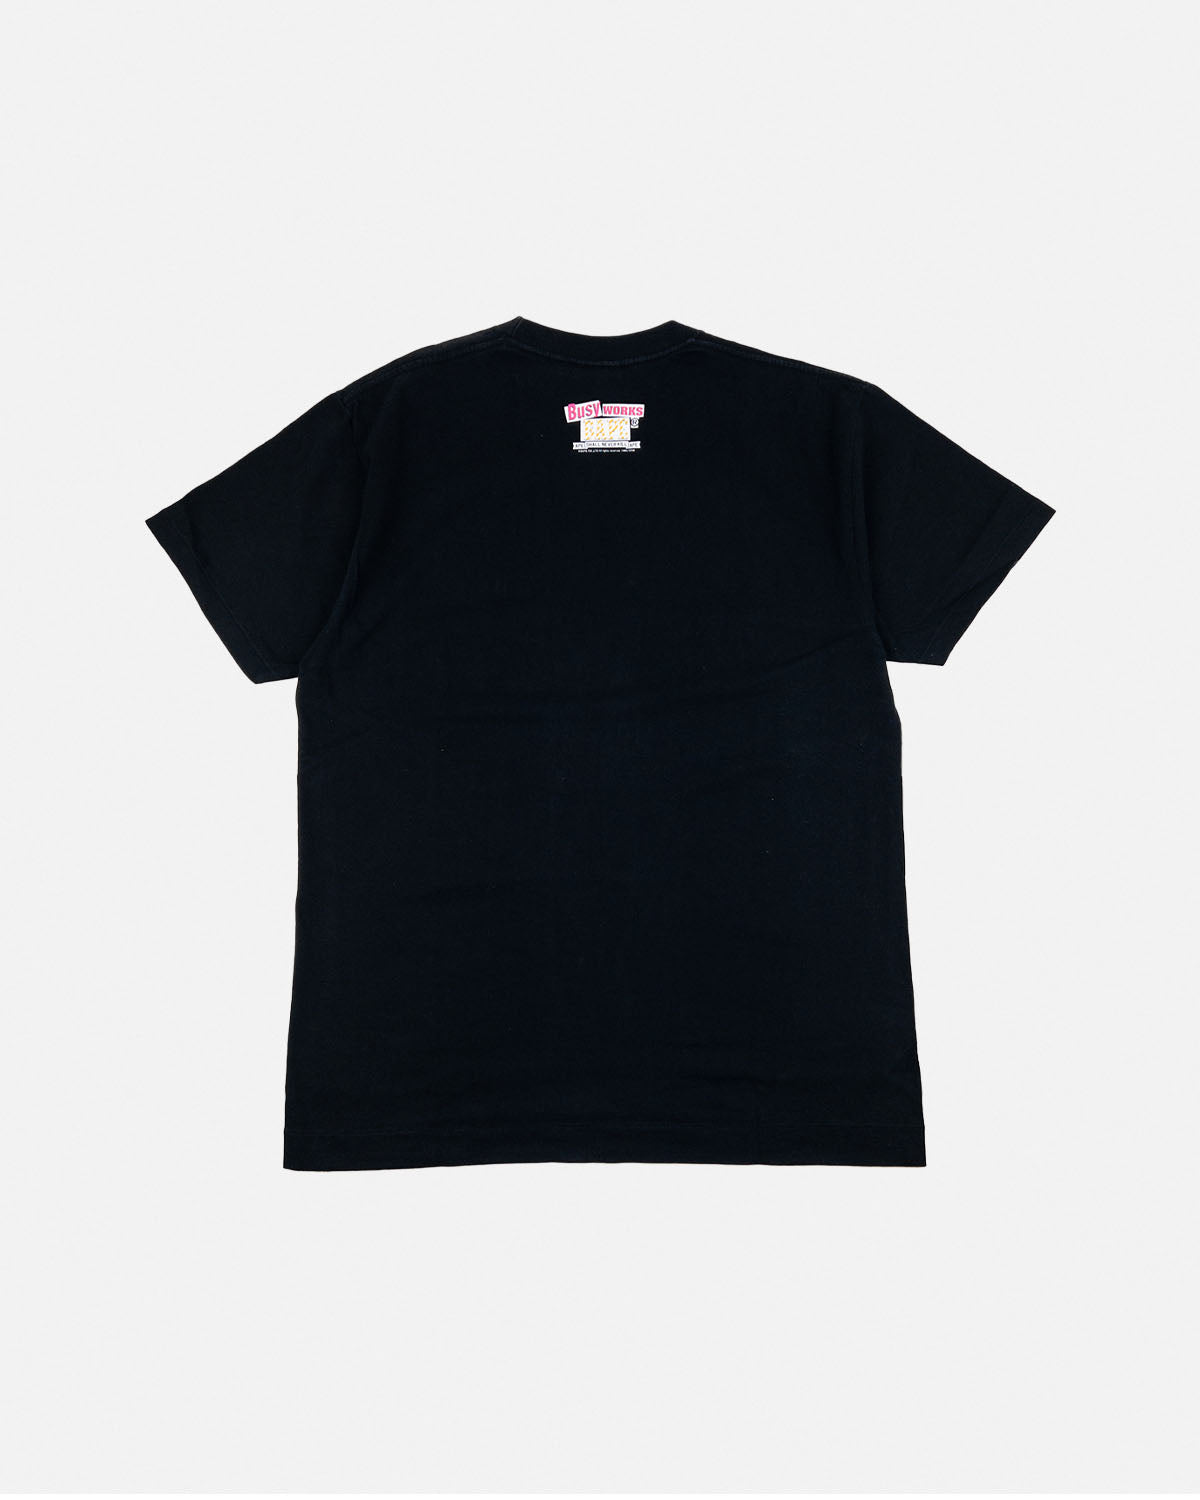 2000s Bape Black/Pink/Yellow Cutout Logo T-Shirt